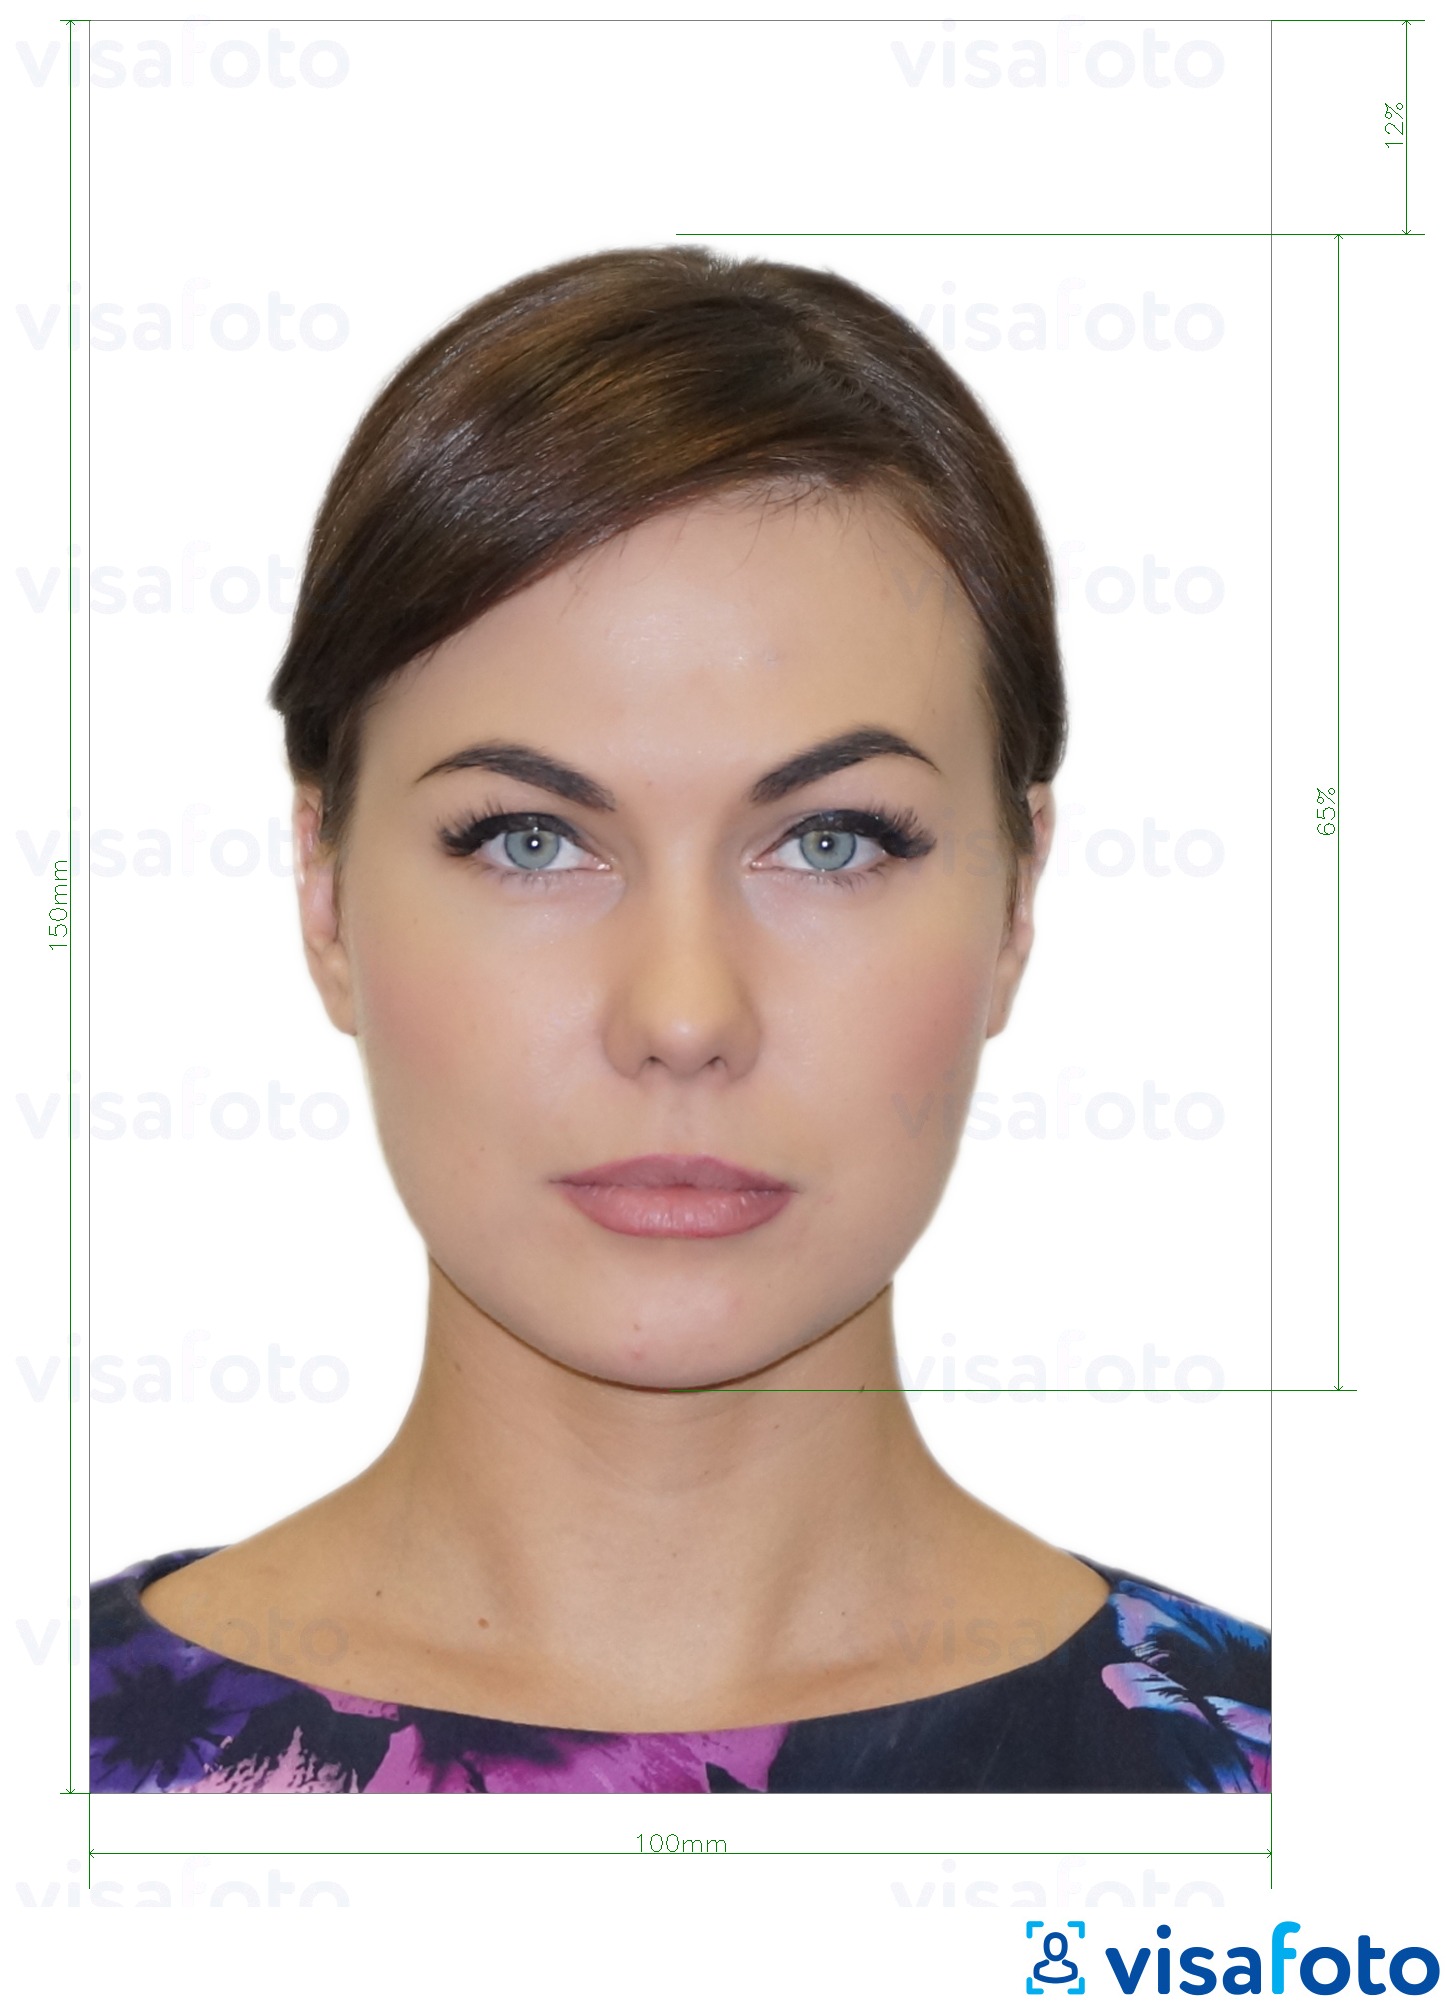 Primjer fotografije za Moldovska osobna iskaznica (Buletin de identitate) 10x15 cm s točno određenom veličinom